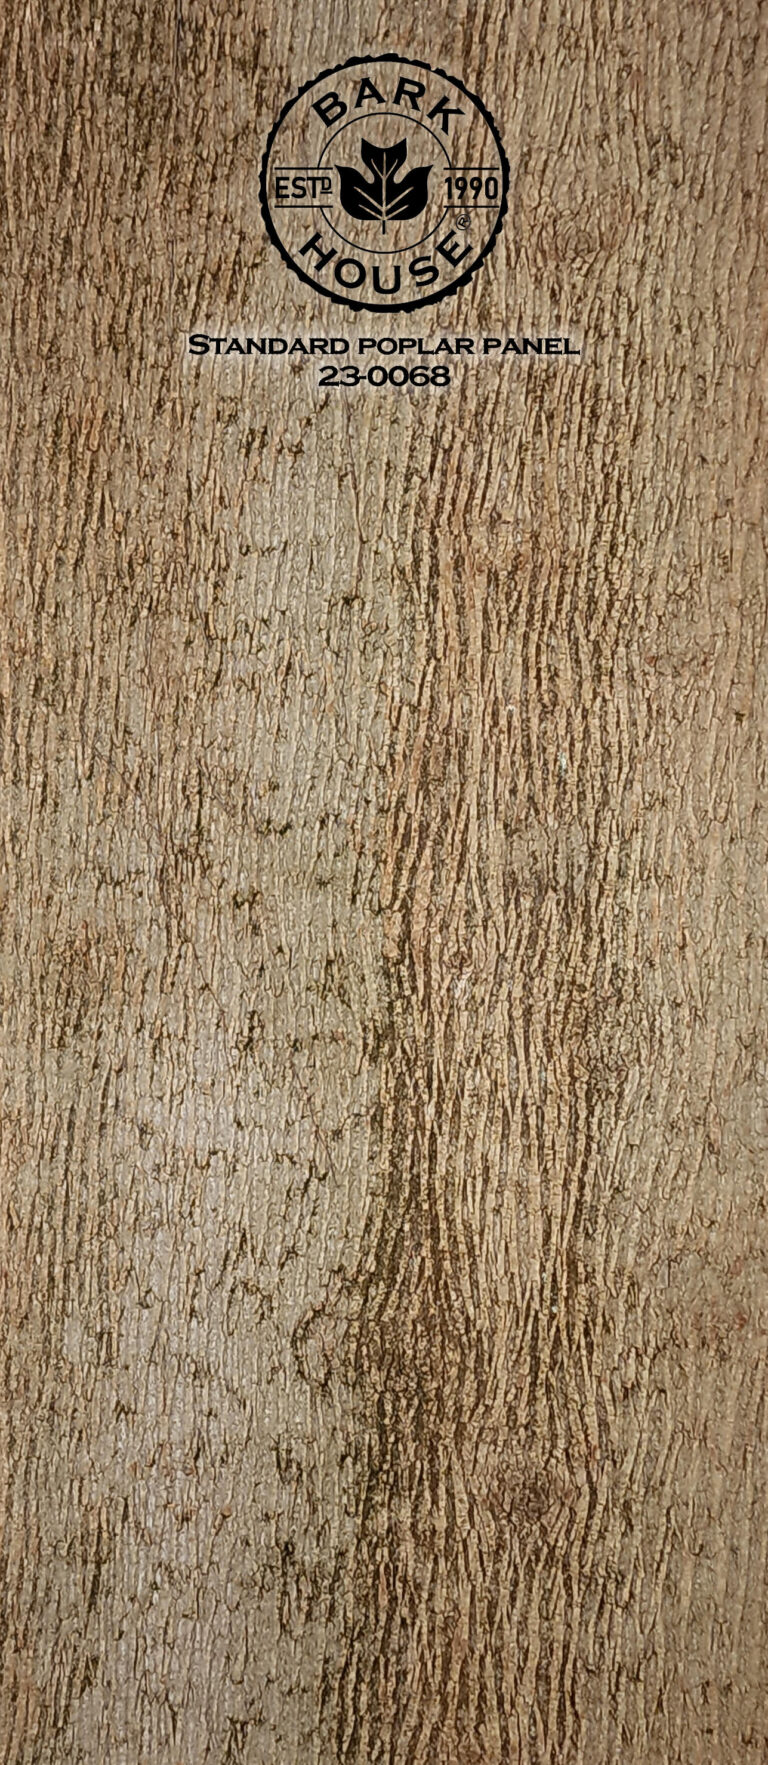 Bark House poplar bark panel SKU POPP-STD-23-0068